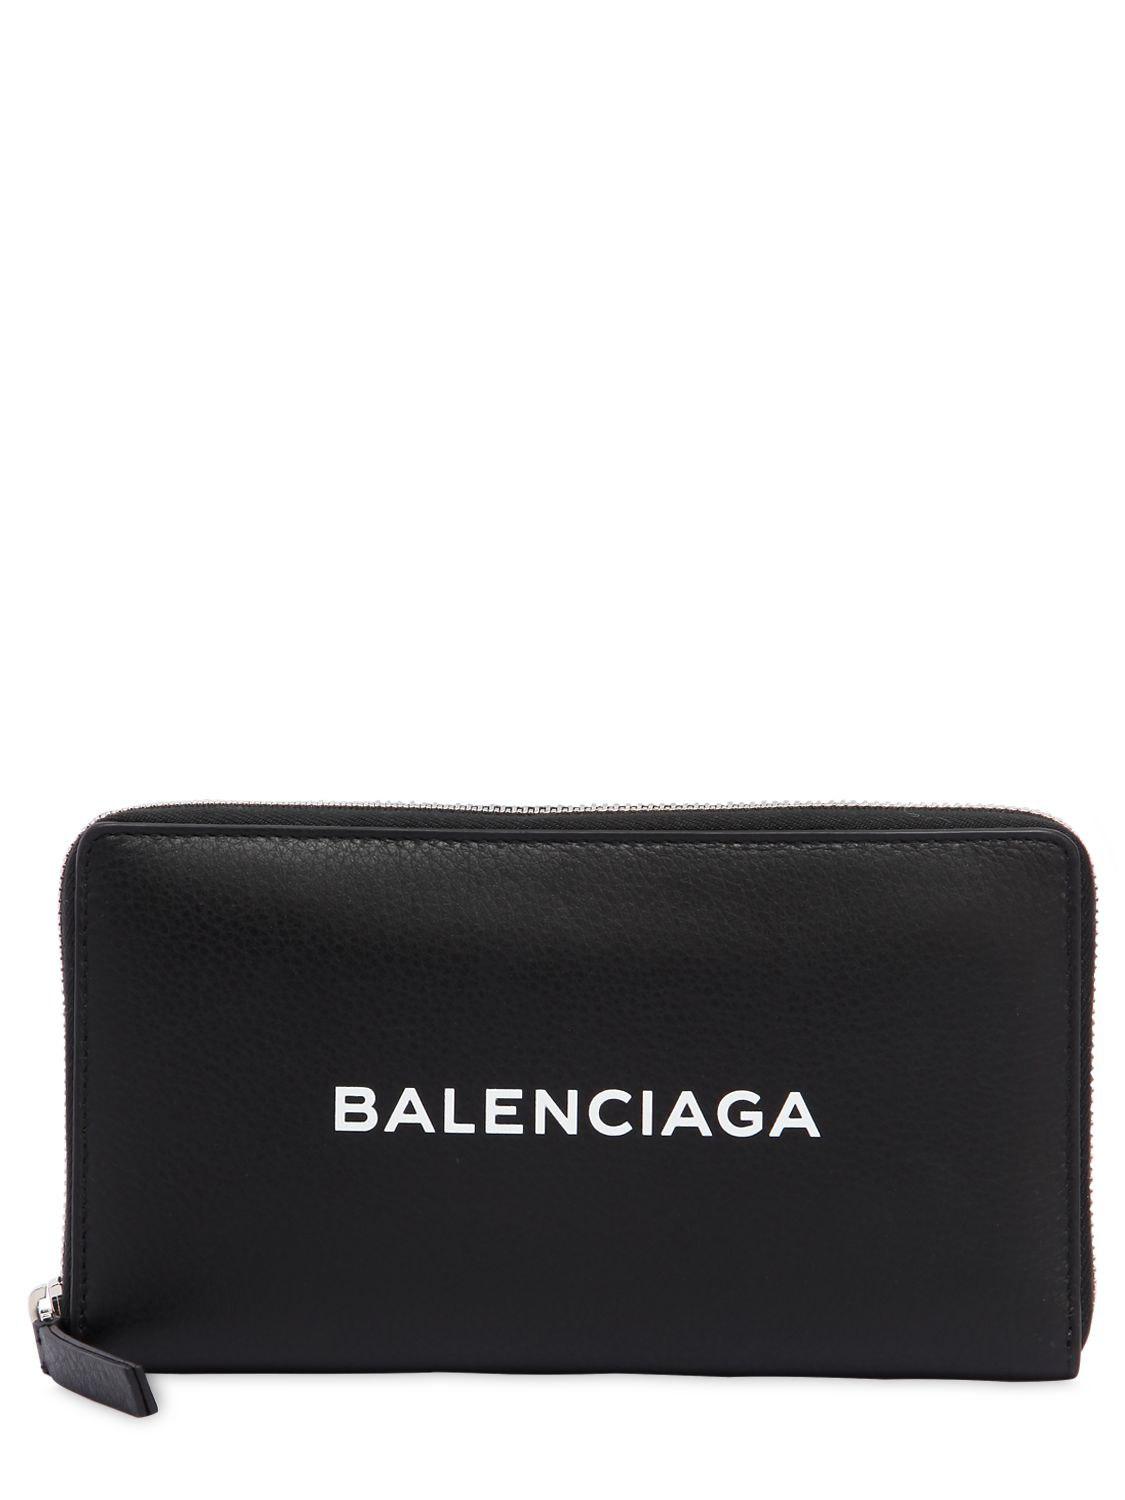 Lyst - Balenciaga Logo Printed Leather Zip Around Wallet in Black ...